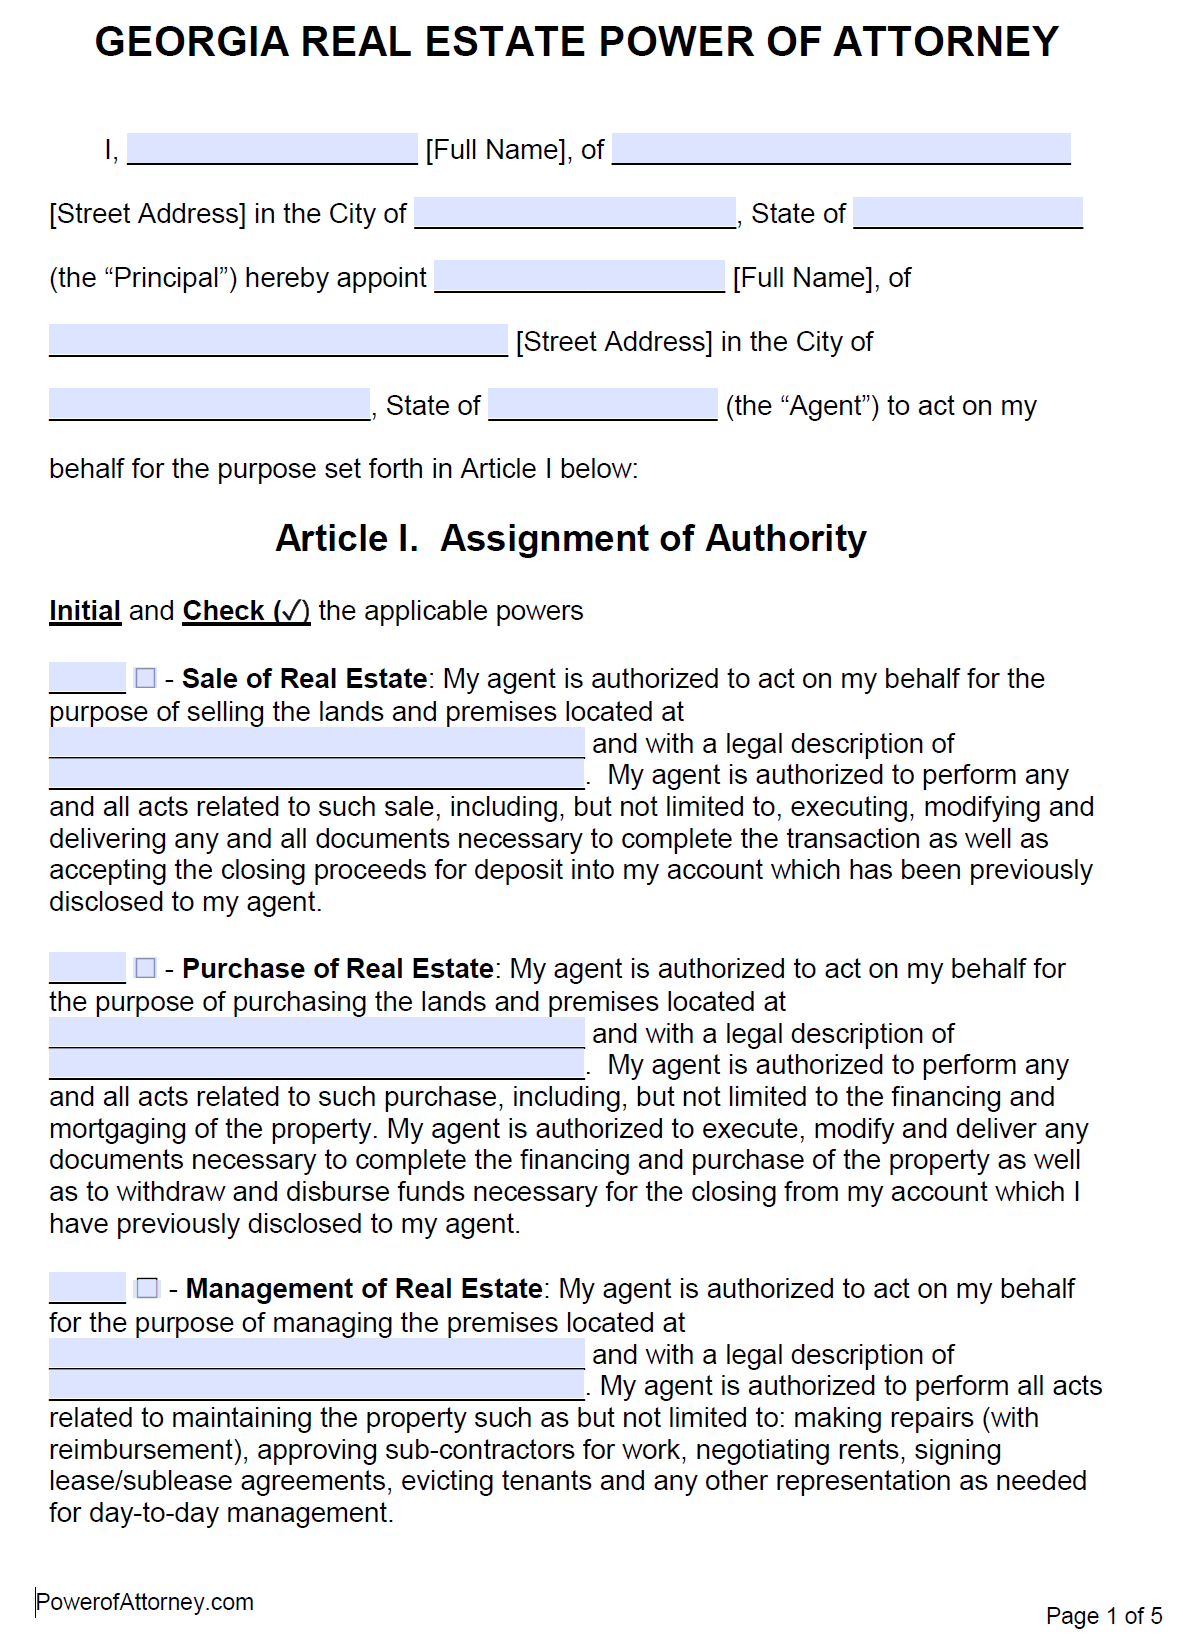 free-real-estate-power-of-attorney-georgia-form-pdf-word